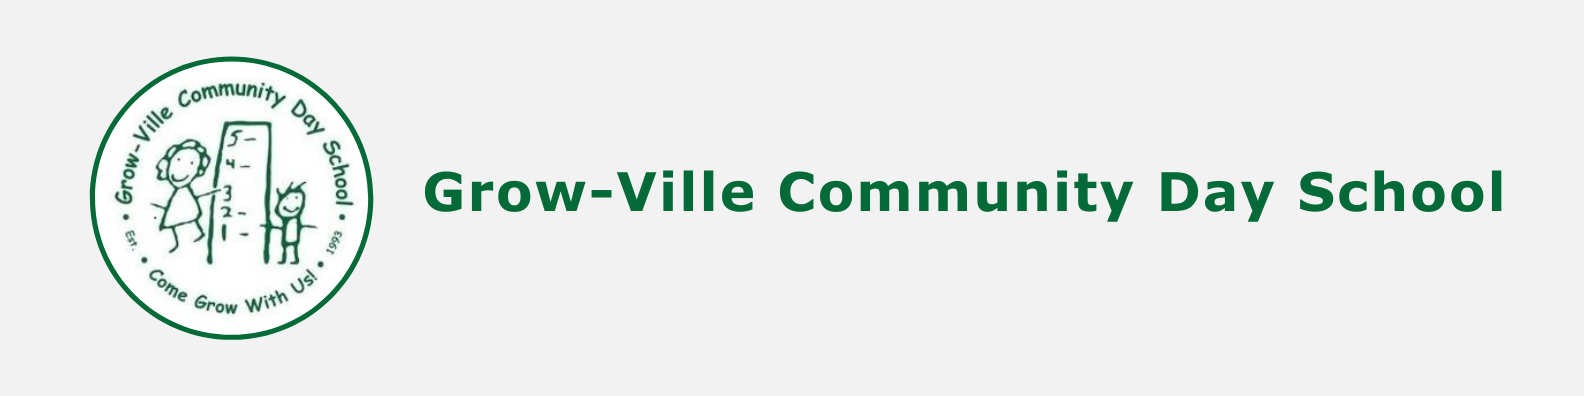 Grow-Ville Community Day School          